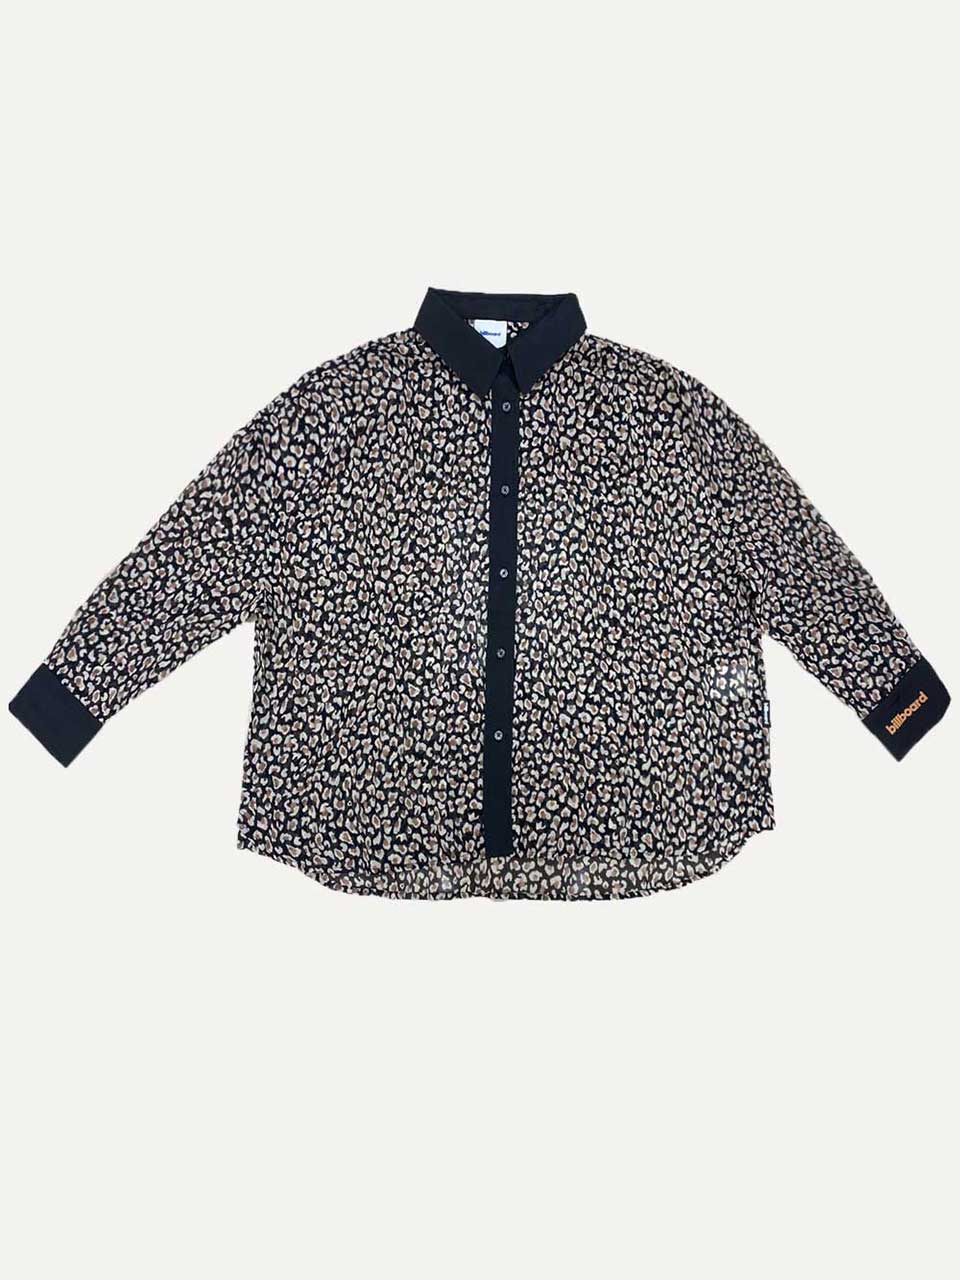 Colored leopard shirt_Black